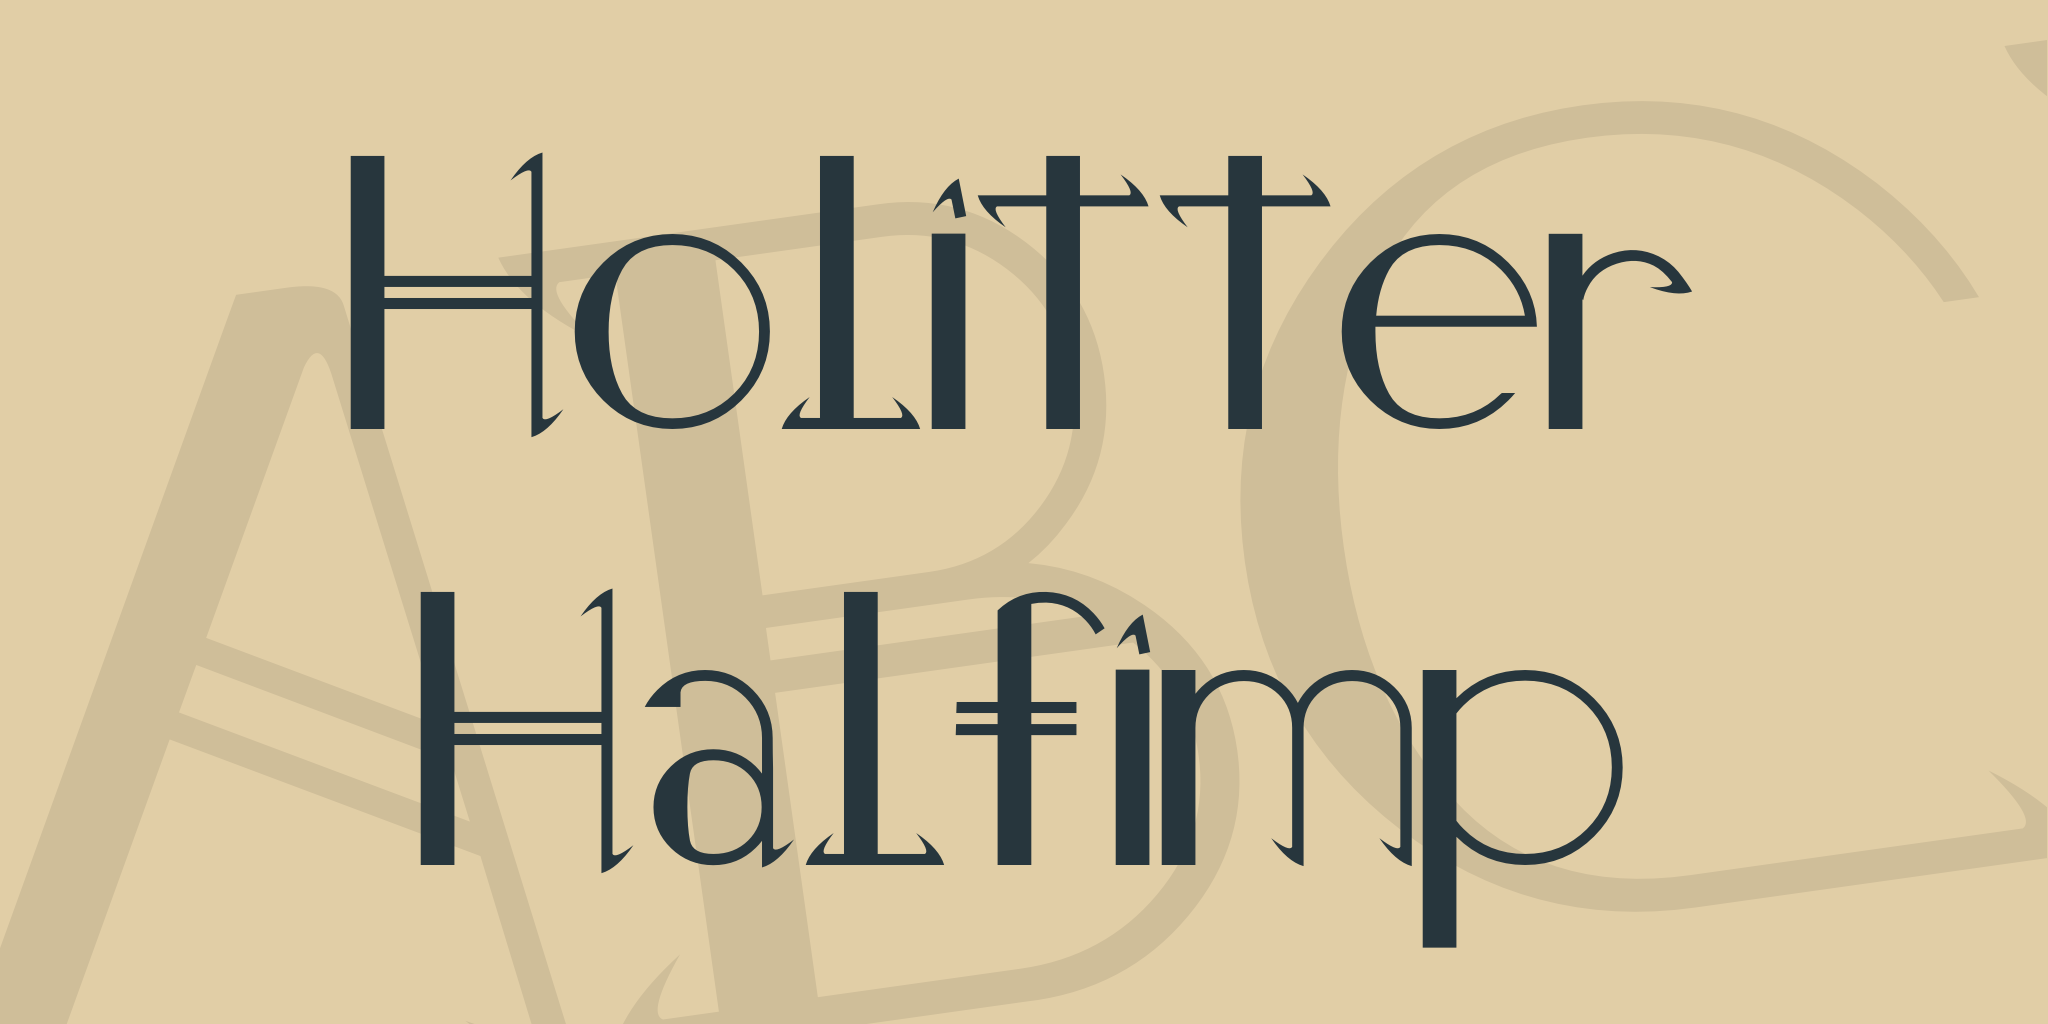 Holitter Halfimp